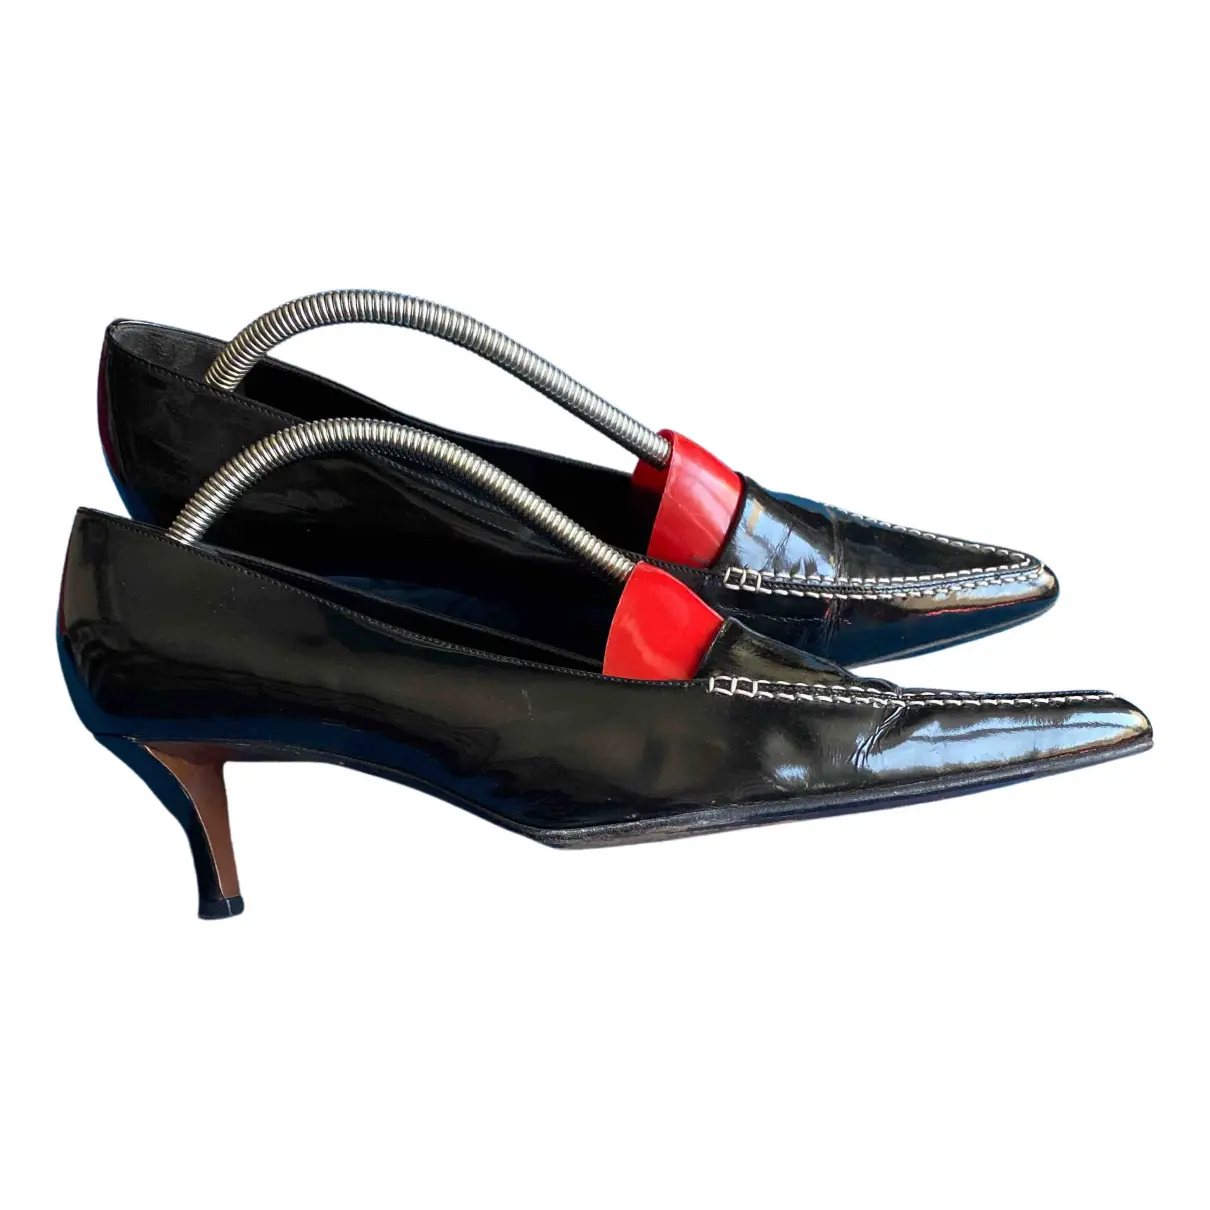 Patent leather heels Walter Steiger